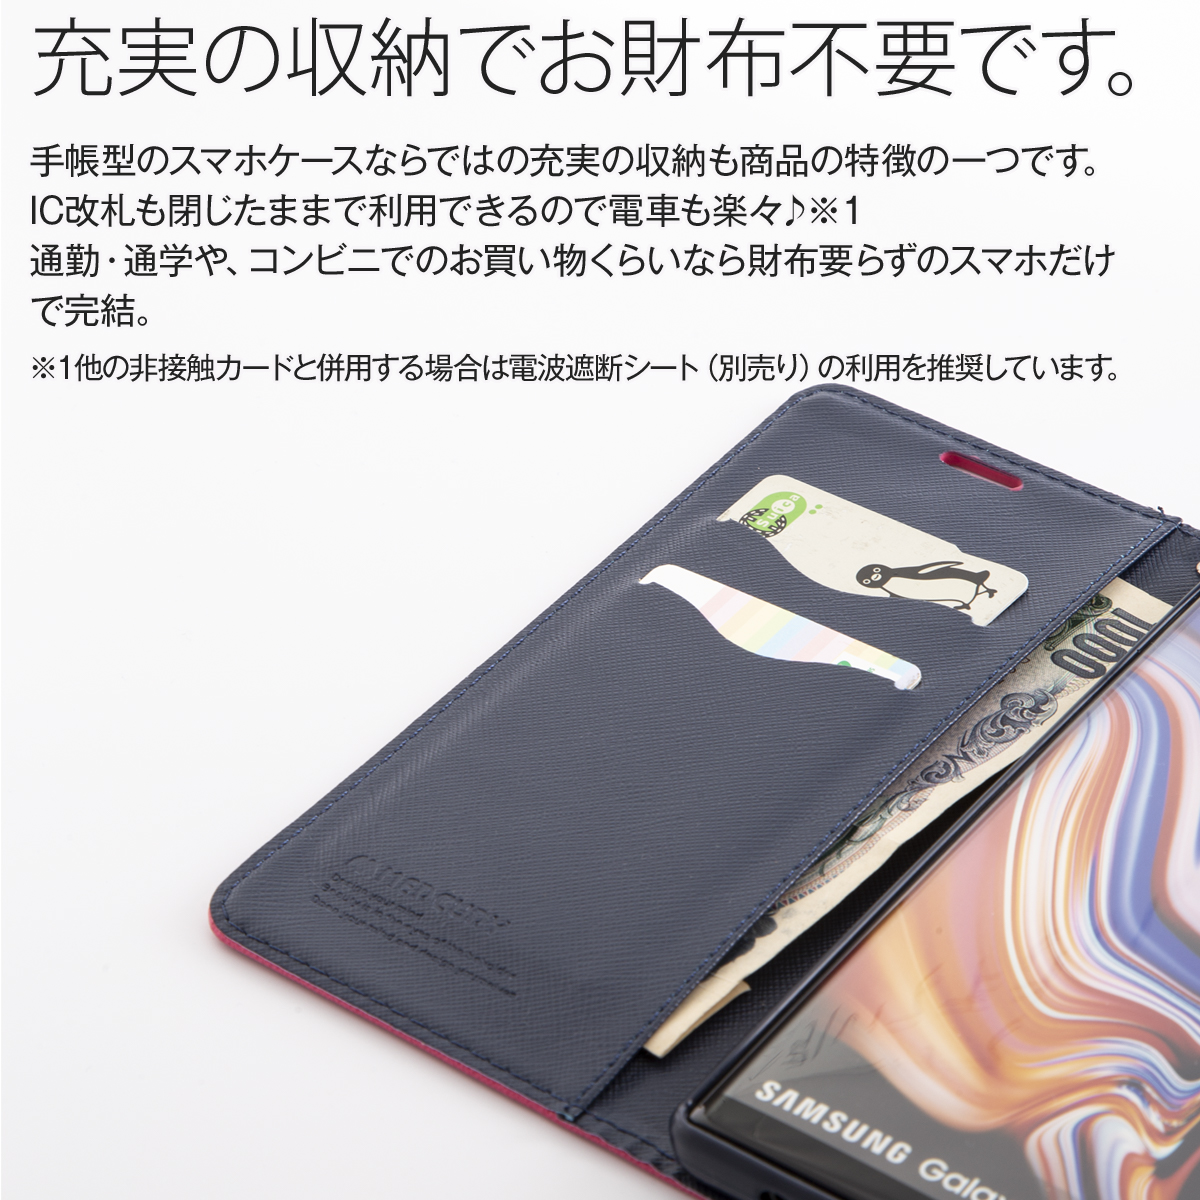 Galaxy Note9 SC-01L SCV40 コンビネーションカラー手帳型ケース